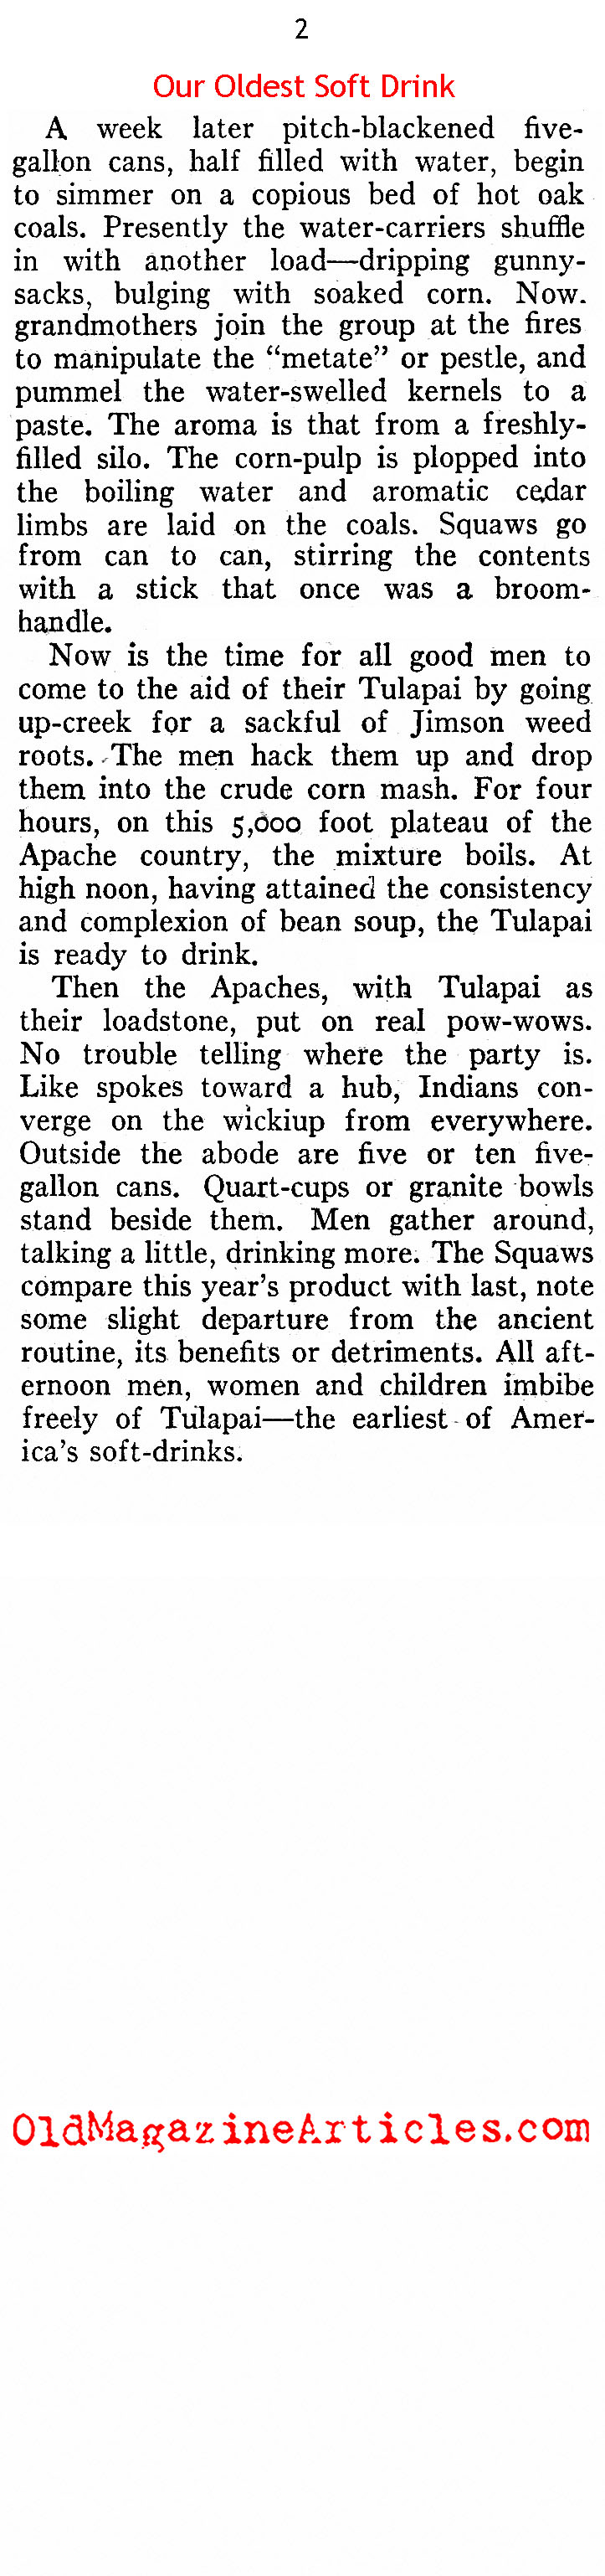 America's Oldest Soft Drink (Pathfinder Magazine, 1944)